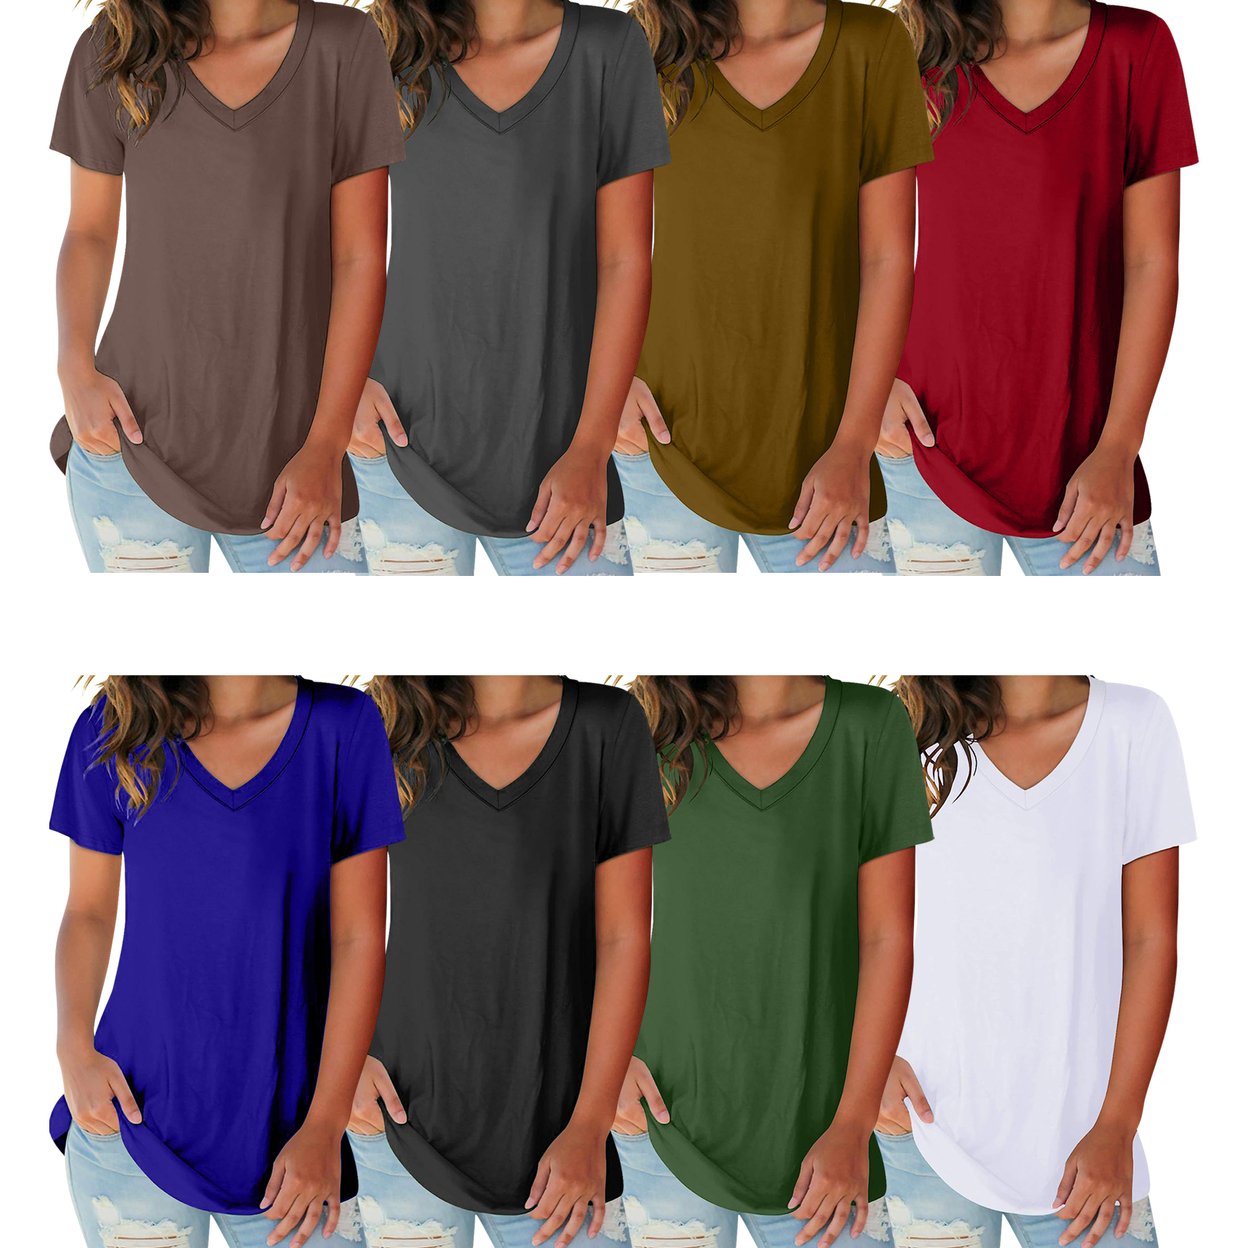 3-Pack: Women's Ultra Soft Smooth Cotton Blend Basic V-Neck Short Sleeve Shirts - Black, Navy, White, Medium